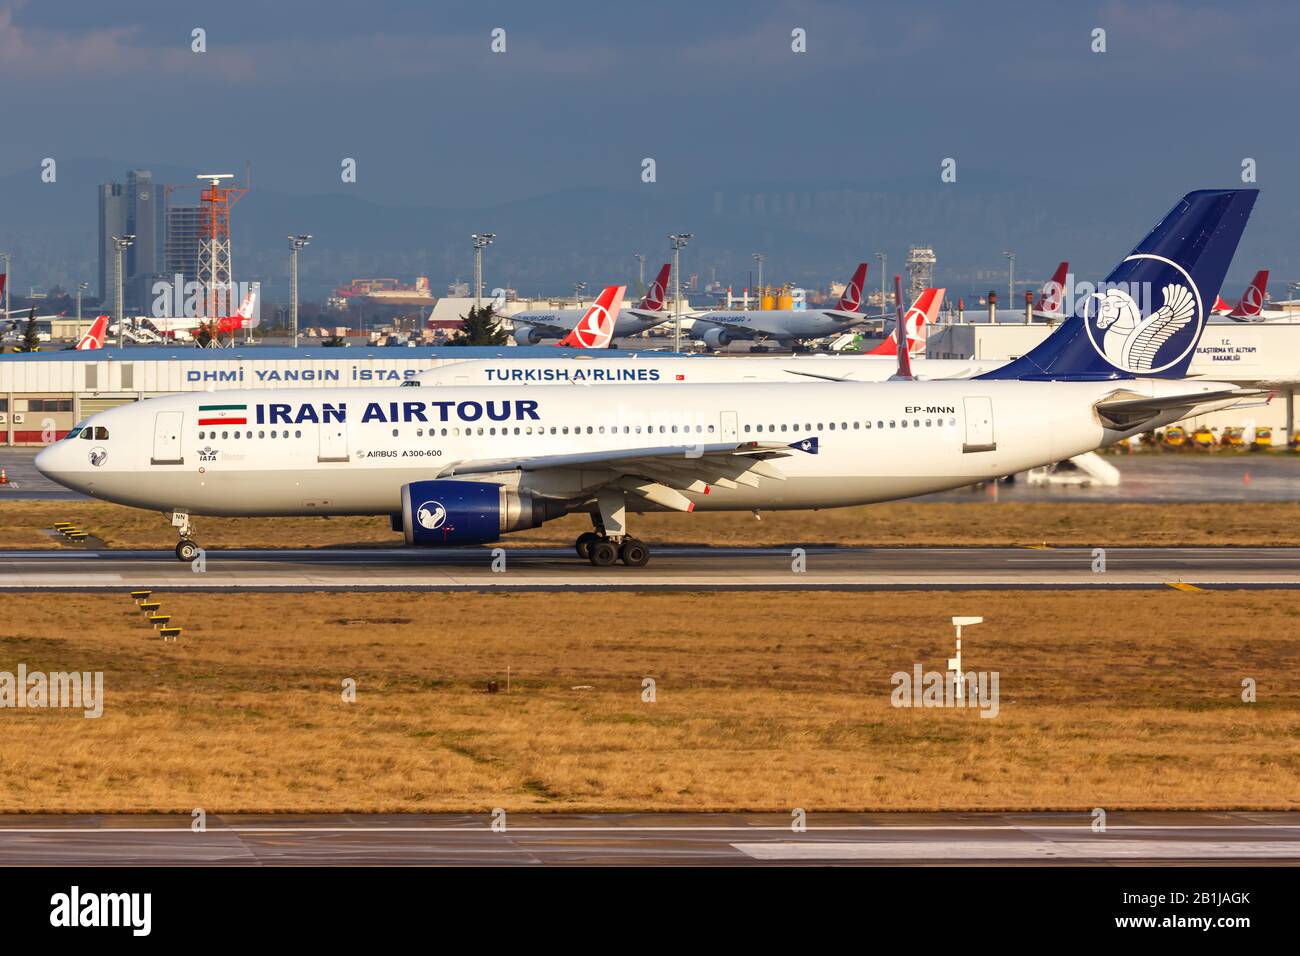 Istanbul, Türkei - 15. Februar 2019: Iran Airtour Airbus A300 Flugzeug am Flughafen Istanbul Atatürk (ist) in der Türkei. Stockfoto